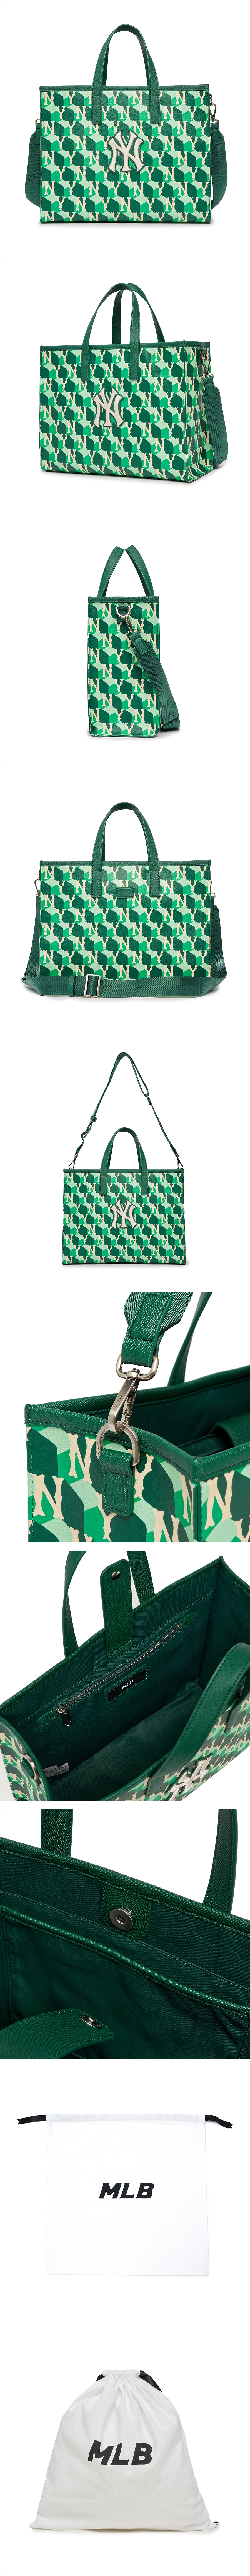 MLB NY Yankees Cube Monogram Medium Tote Bag Green BNWT Authentic